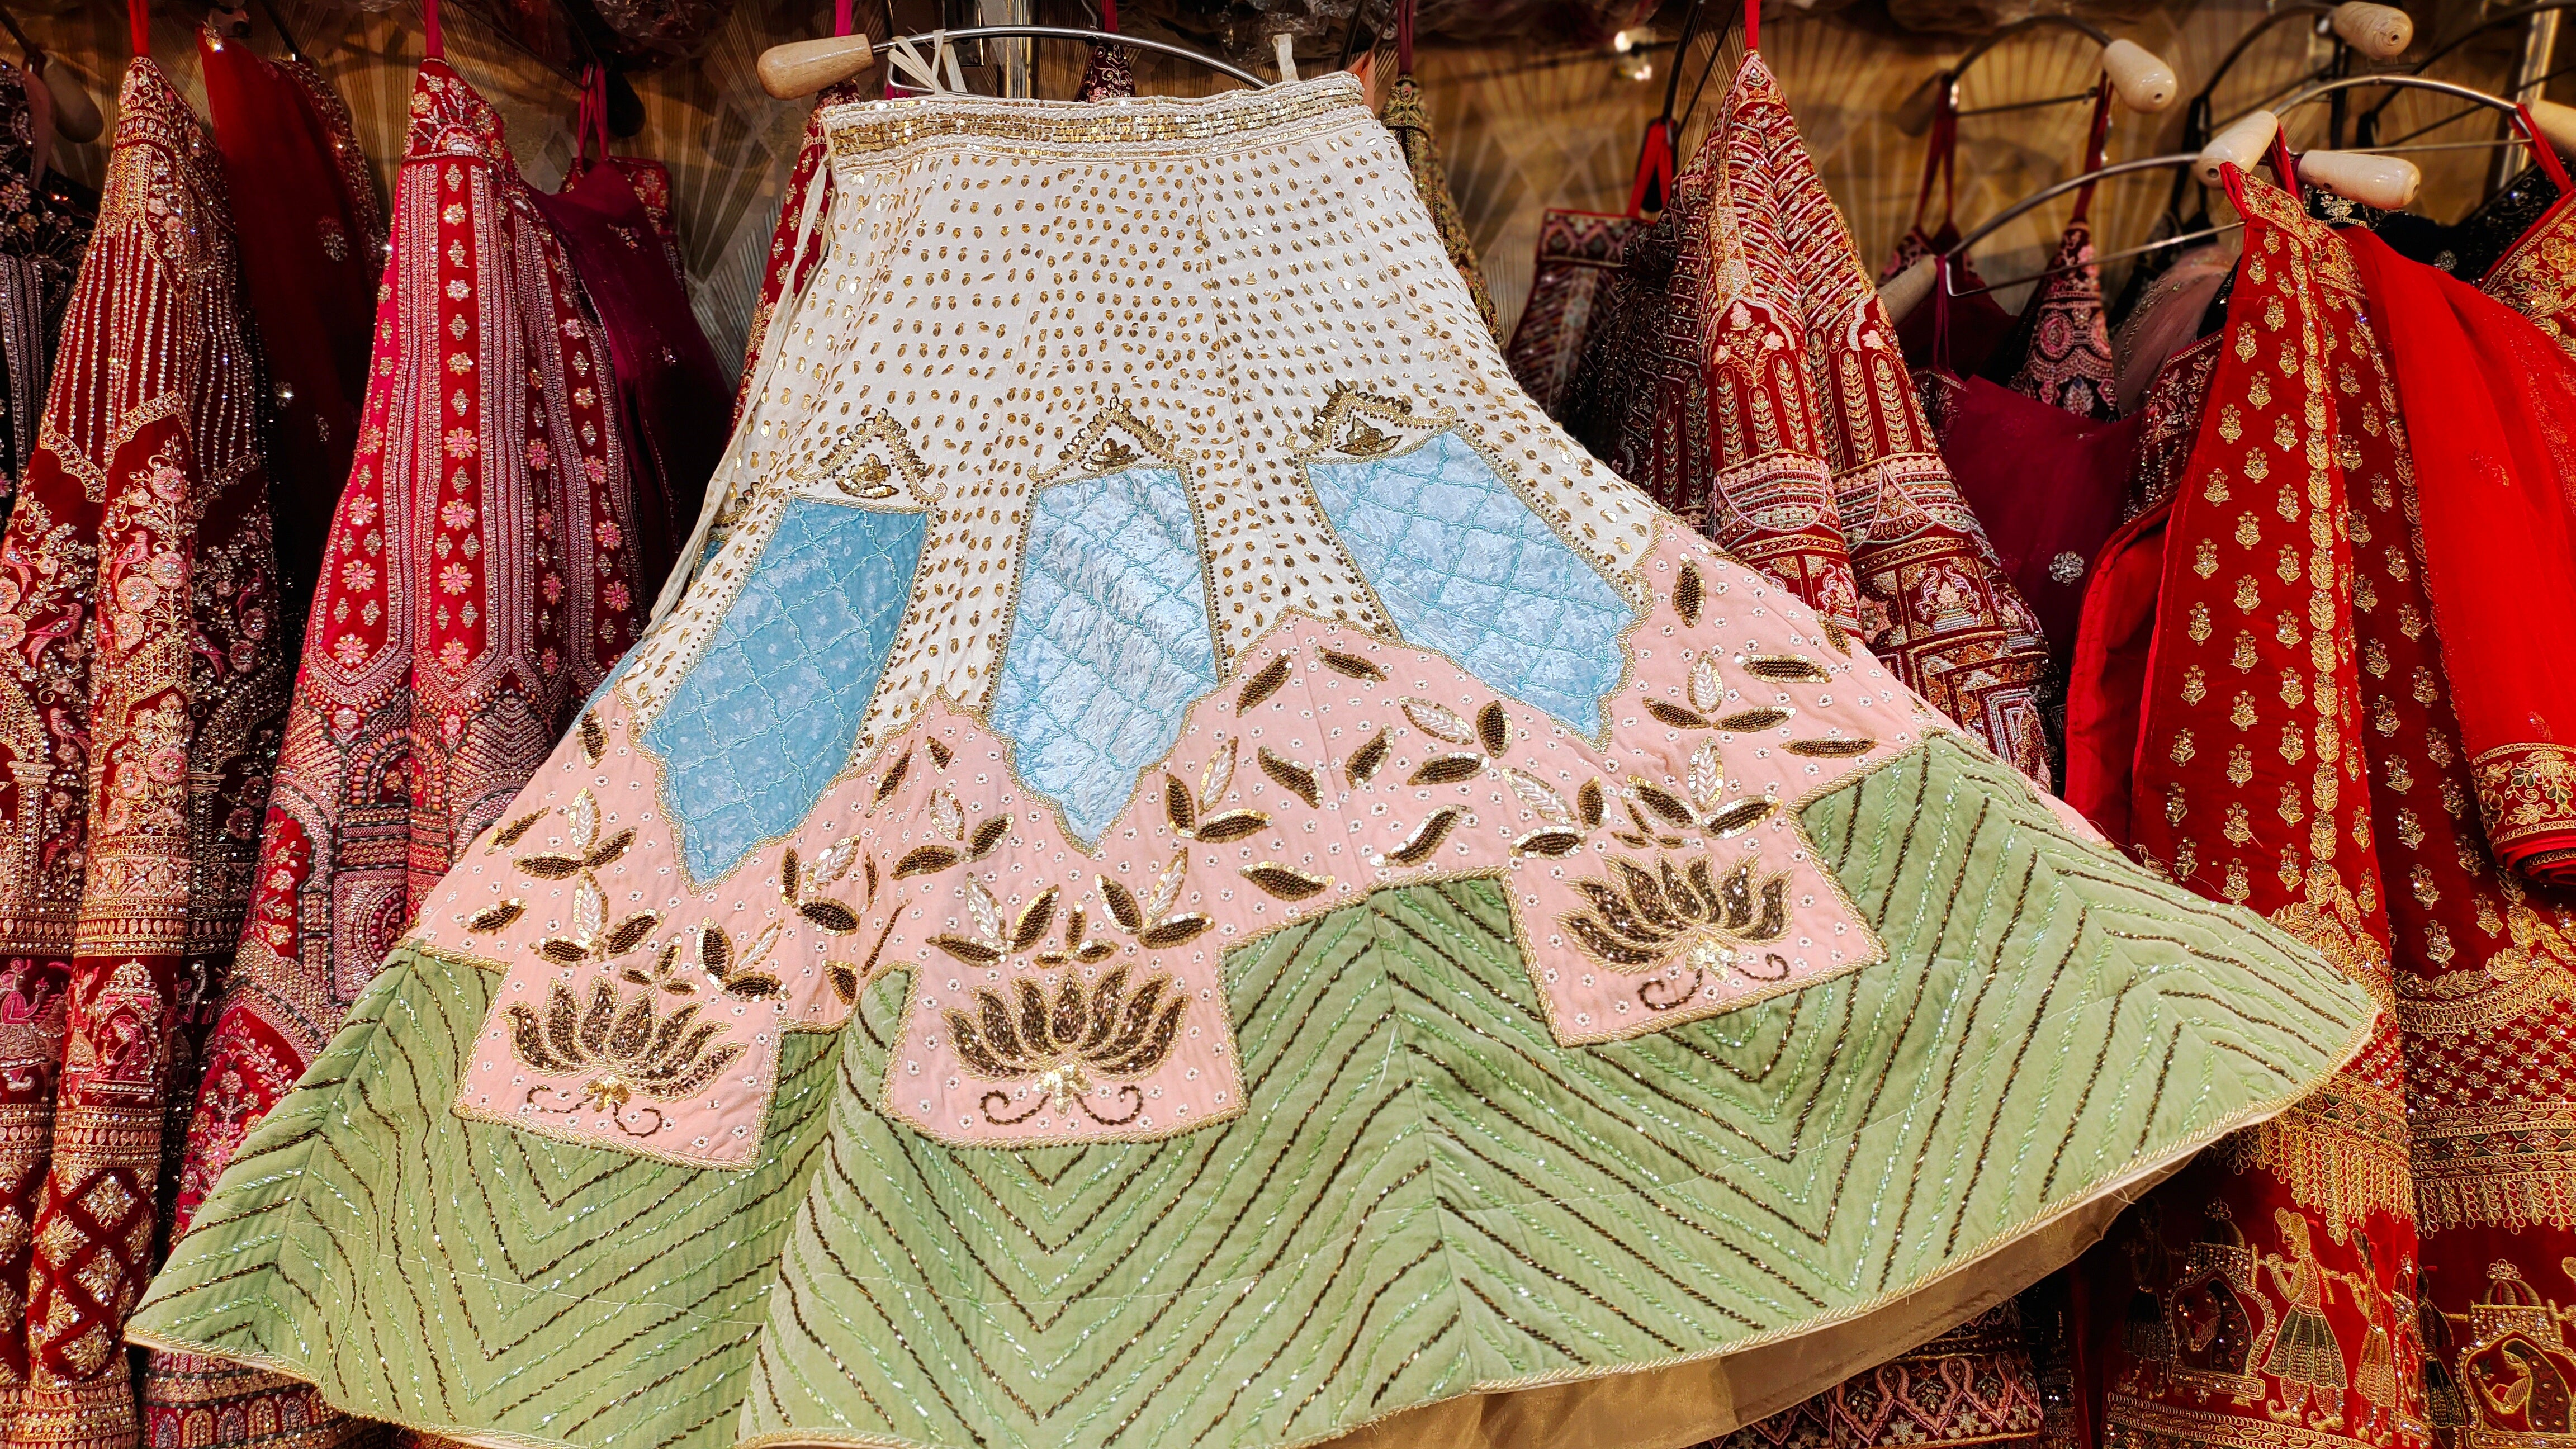 Where should I go to buy wedding lehenga in Delhi? - Quora